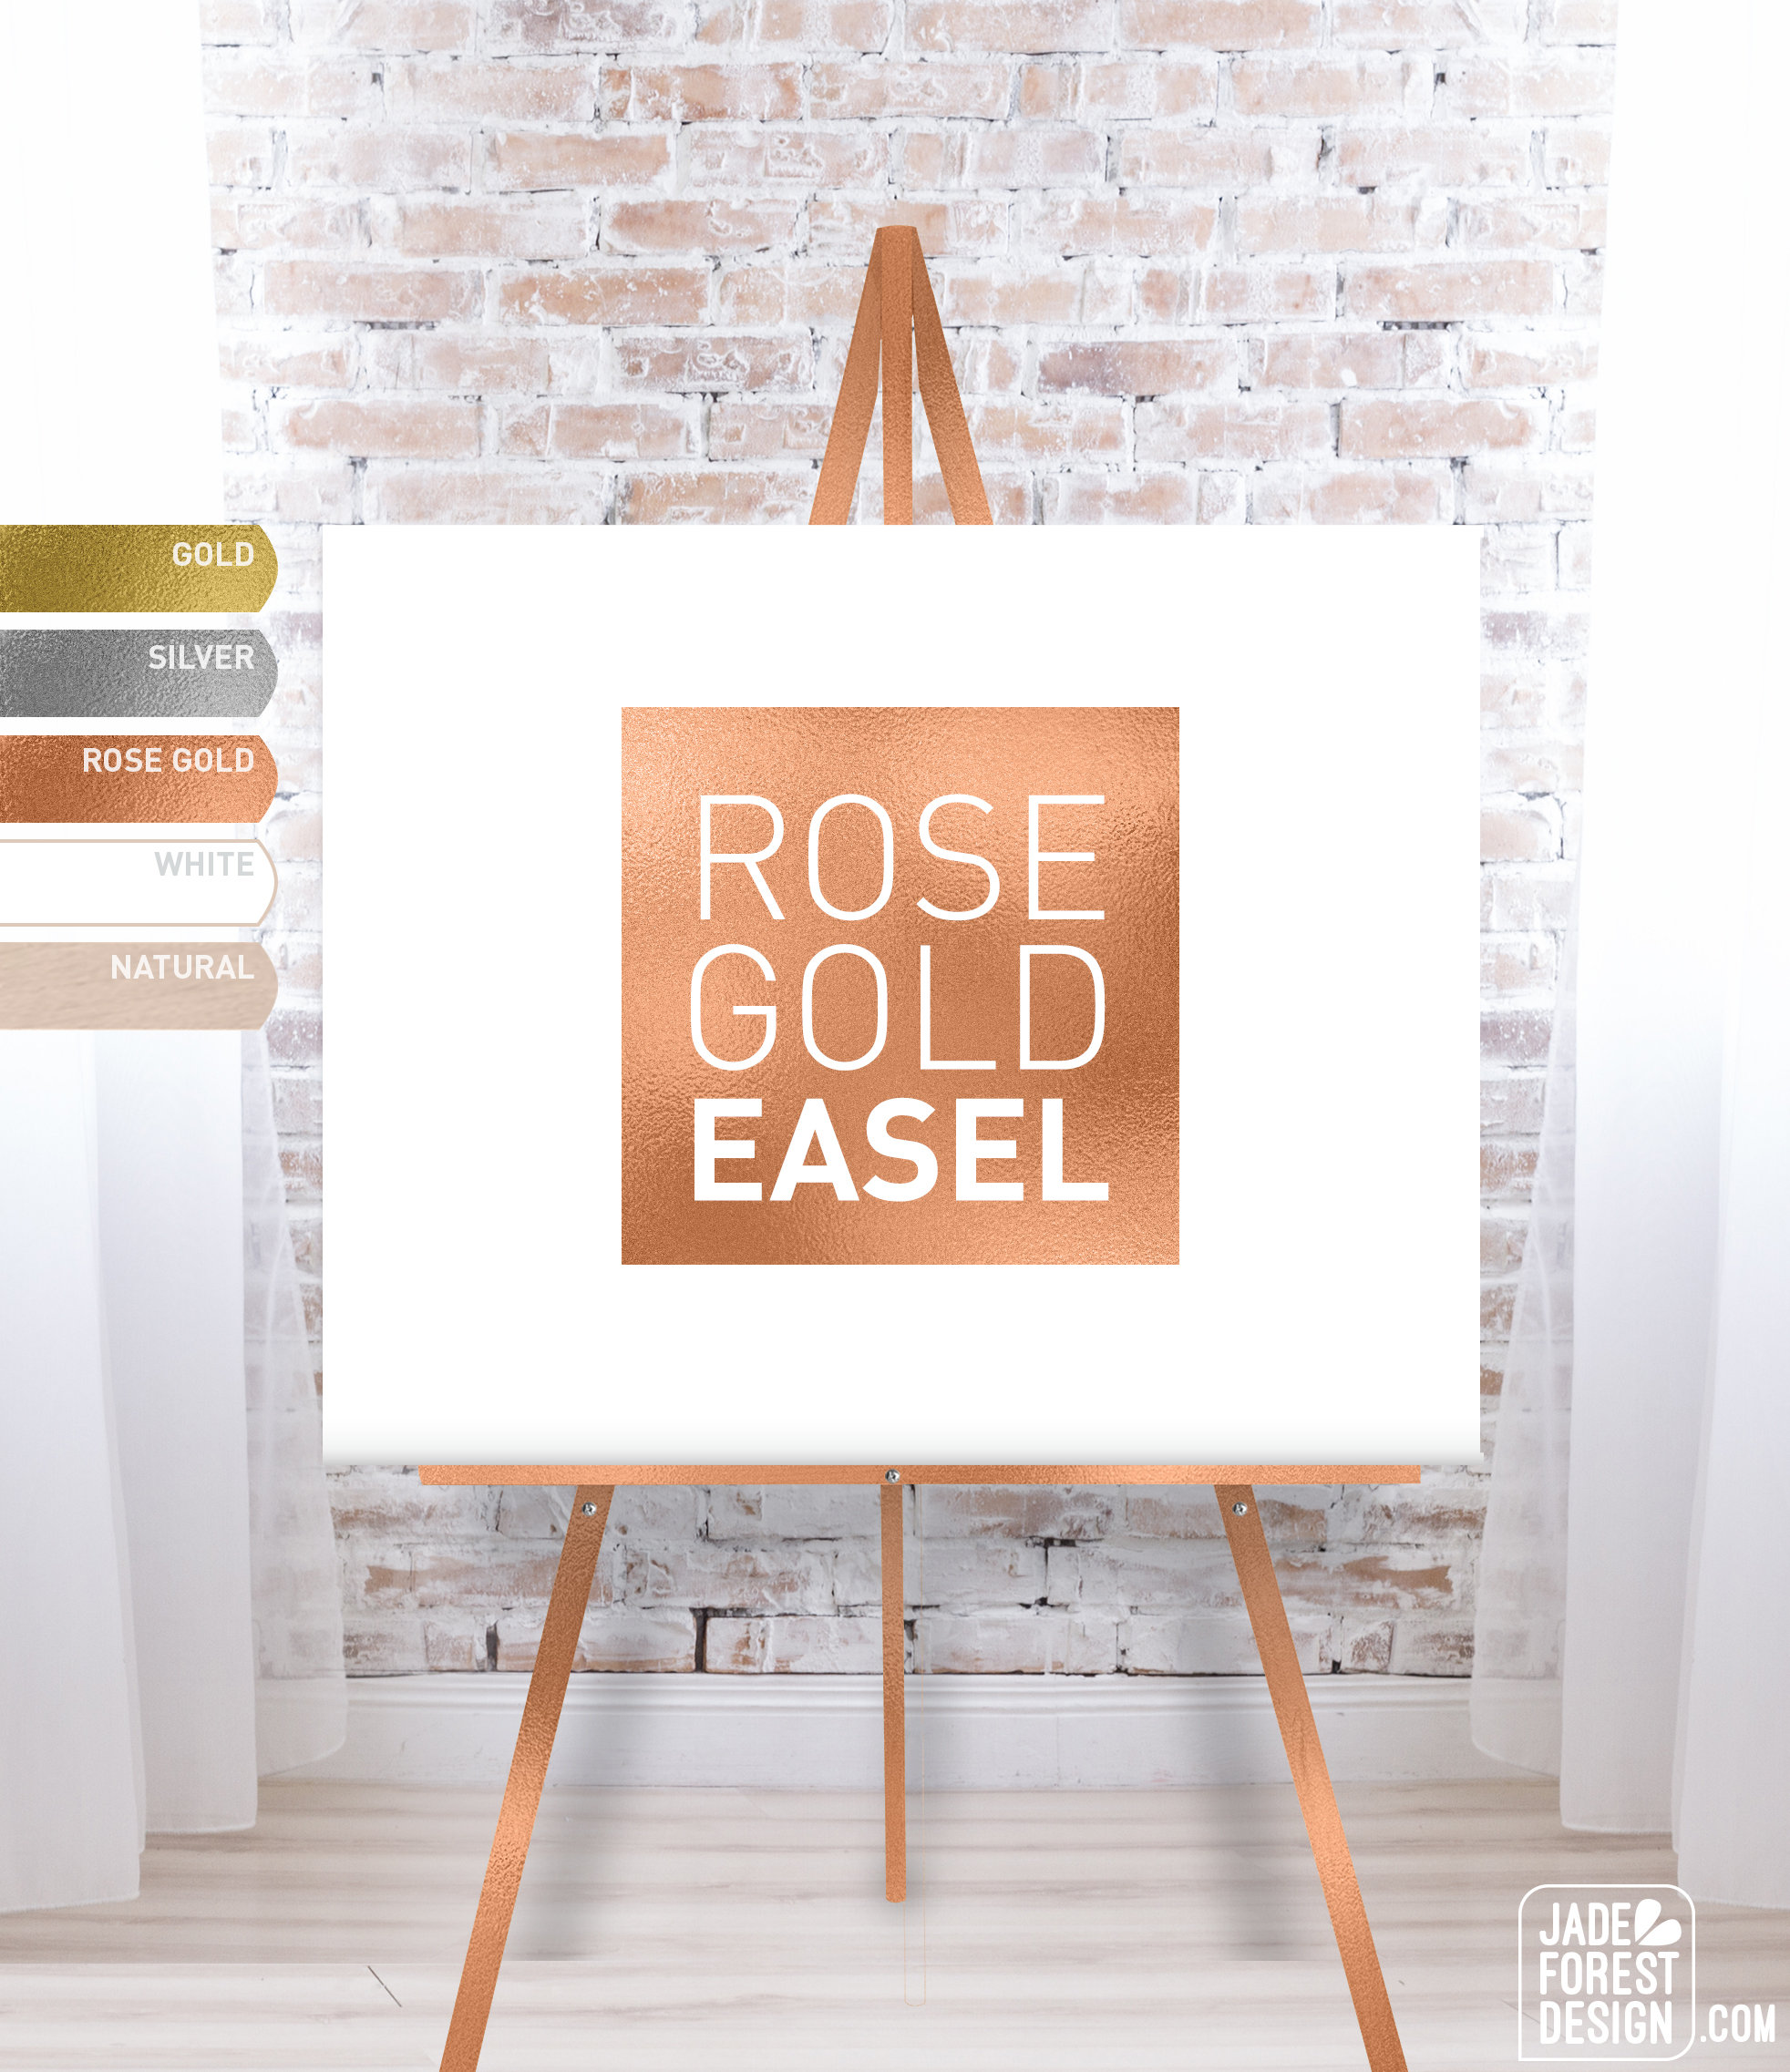 Gold Floor Easel — THE WHITE HOUSE CO.